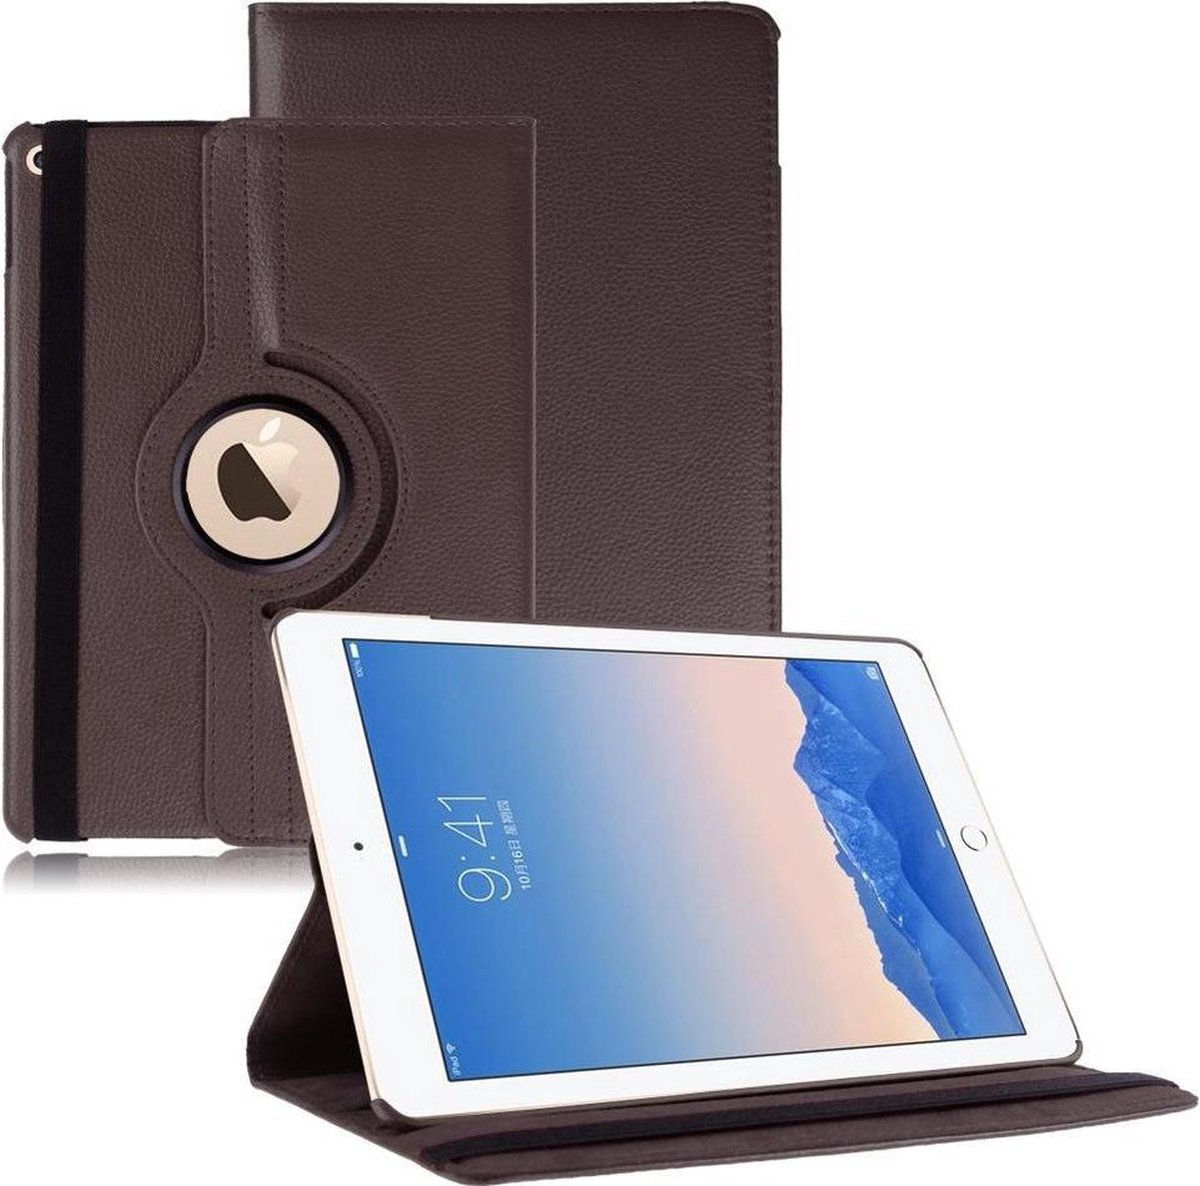 iPad Pro 9.7 Hoes Cover 360 graden Multi-stand Case draaibare Bruin